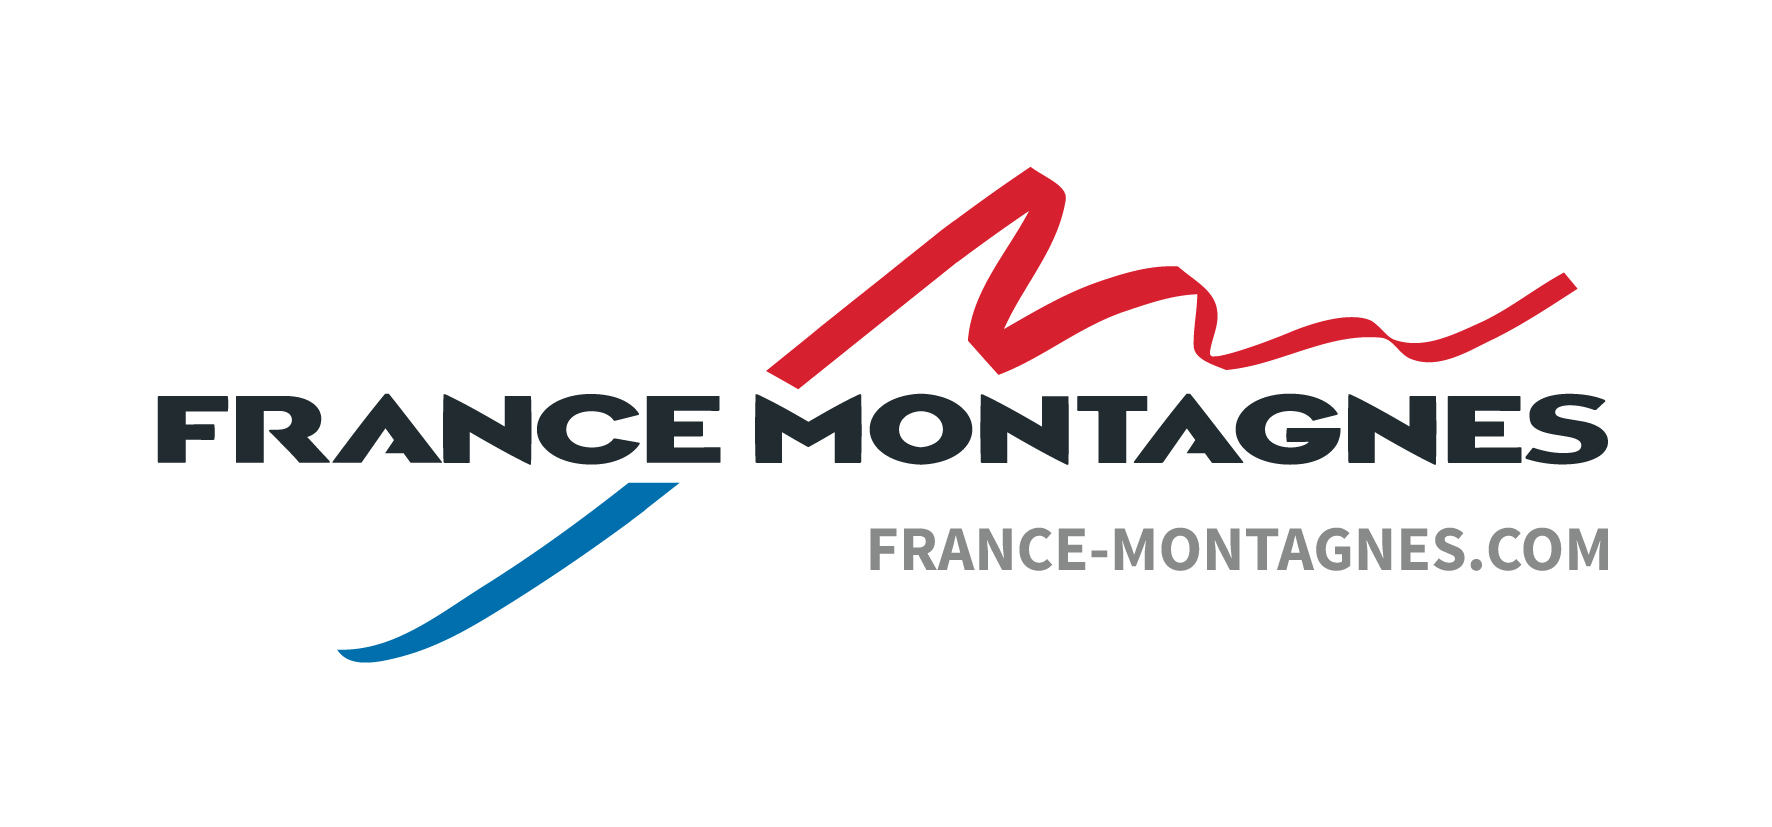 France Montagnes family